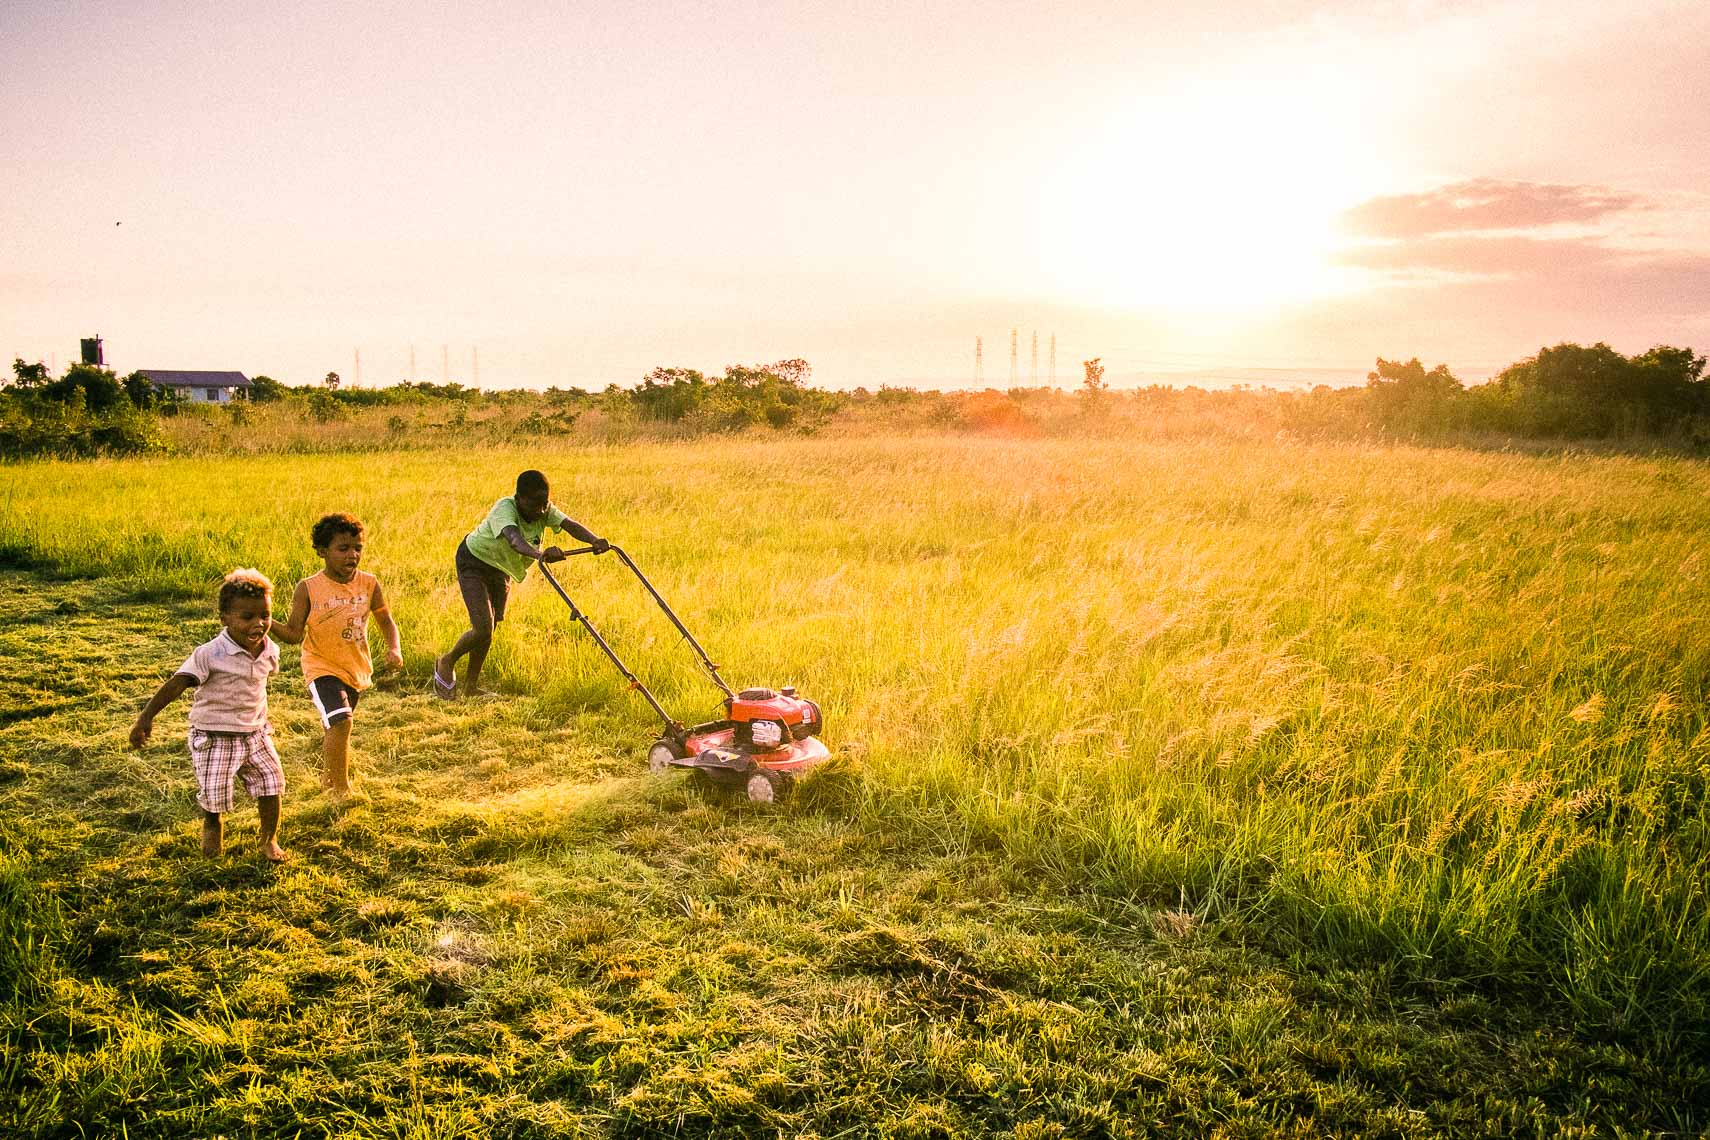 mowing the grass - city of refuge - tema ghana